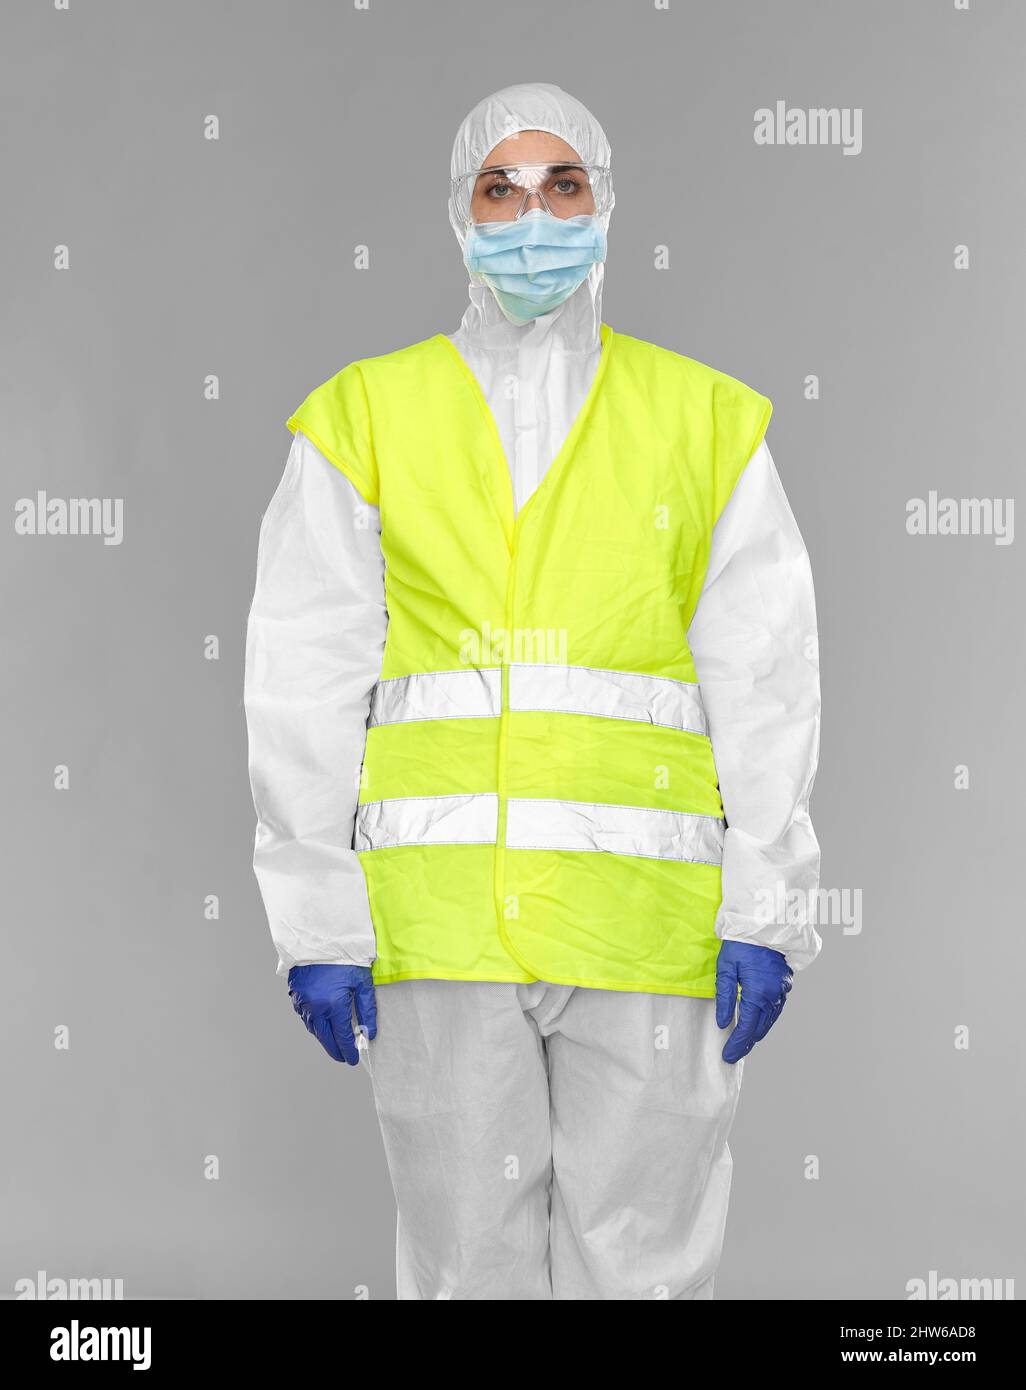 healthcare or sanitation worker in hazmat suit Stock Photo